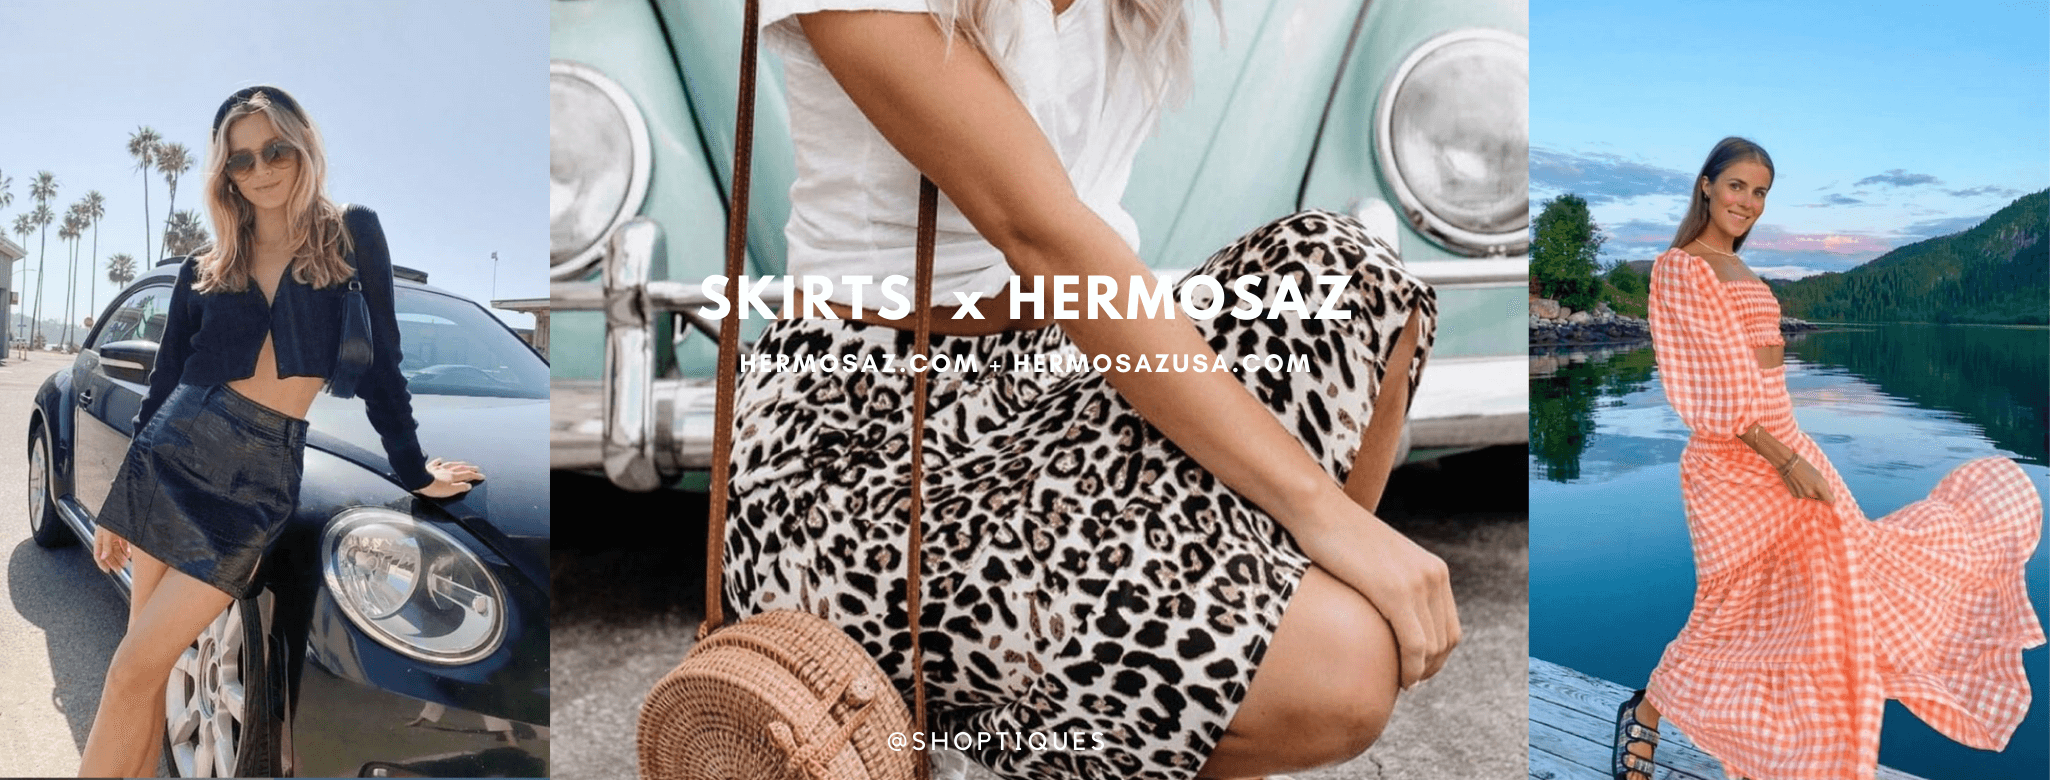 Skirts x Hermosaz